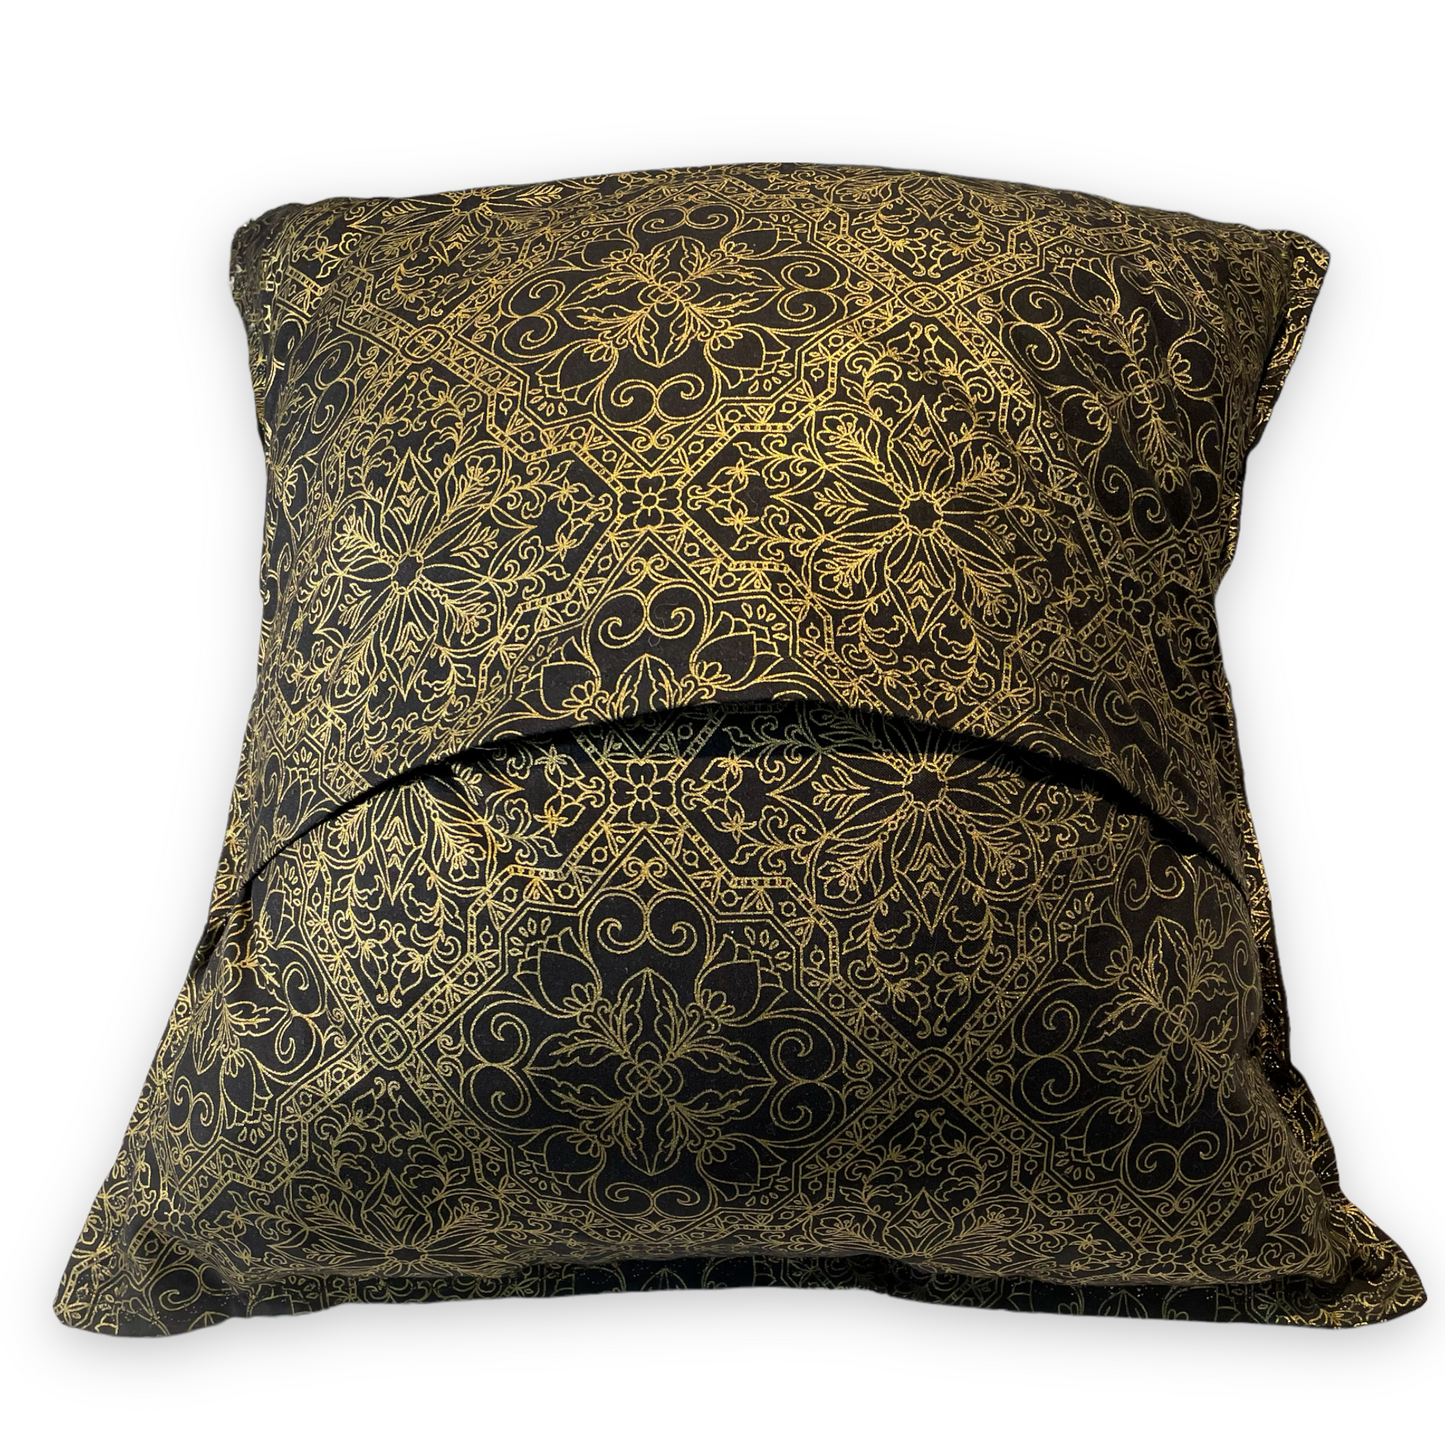 Black and Gold Christmas Pillow Sham. 1 Christmas Sham, Insert Sold Separately - Home Stitchery Decor